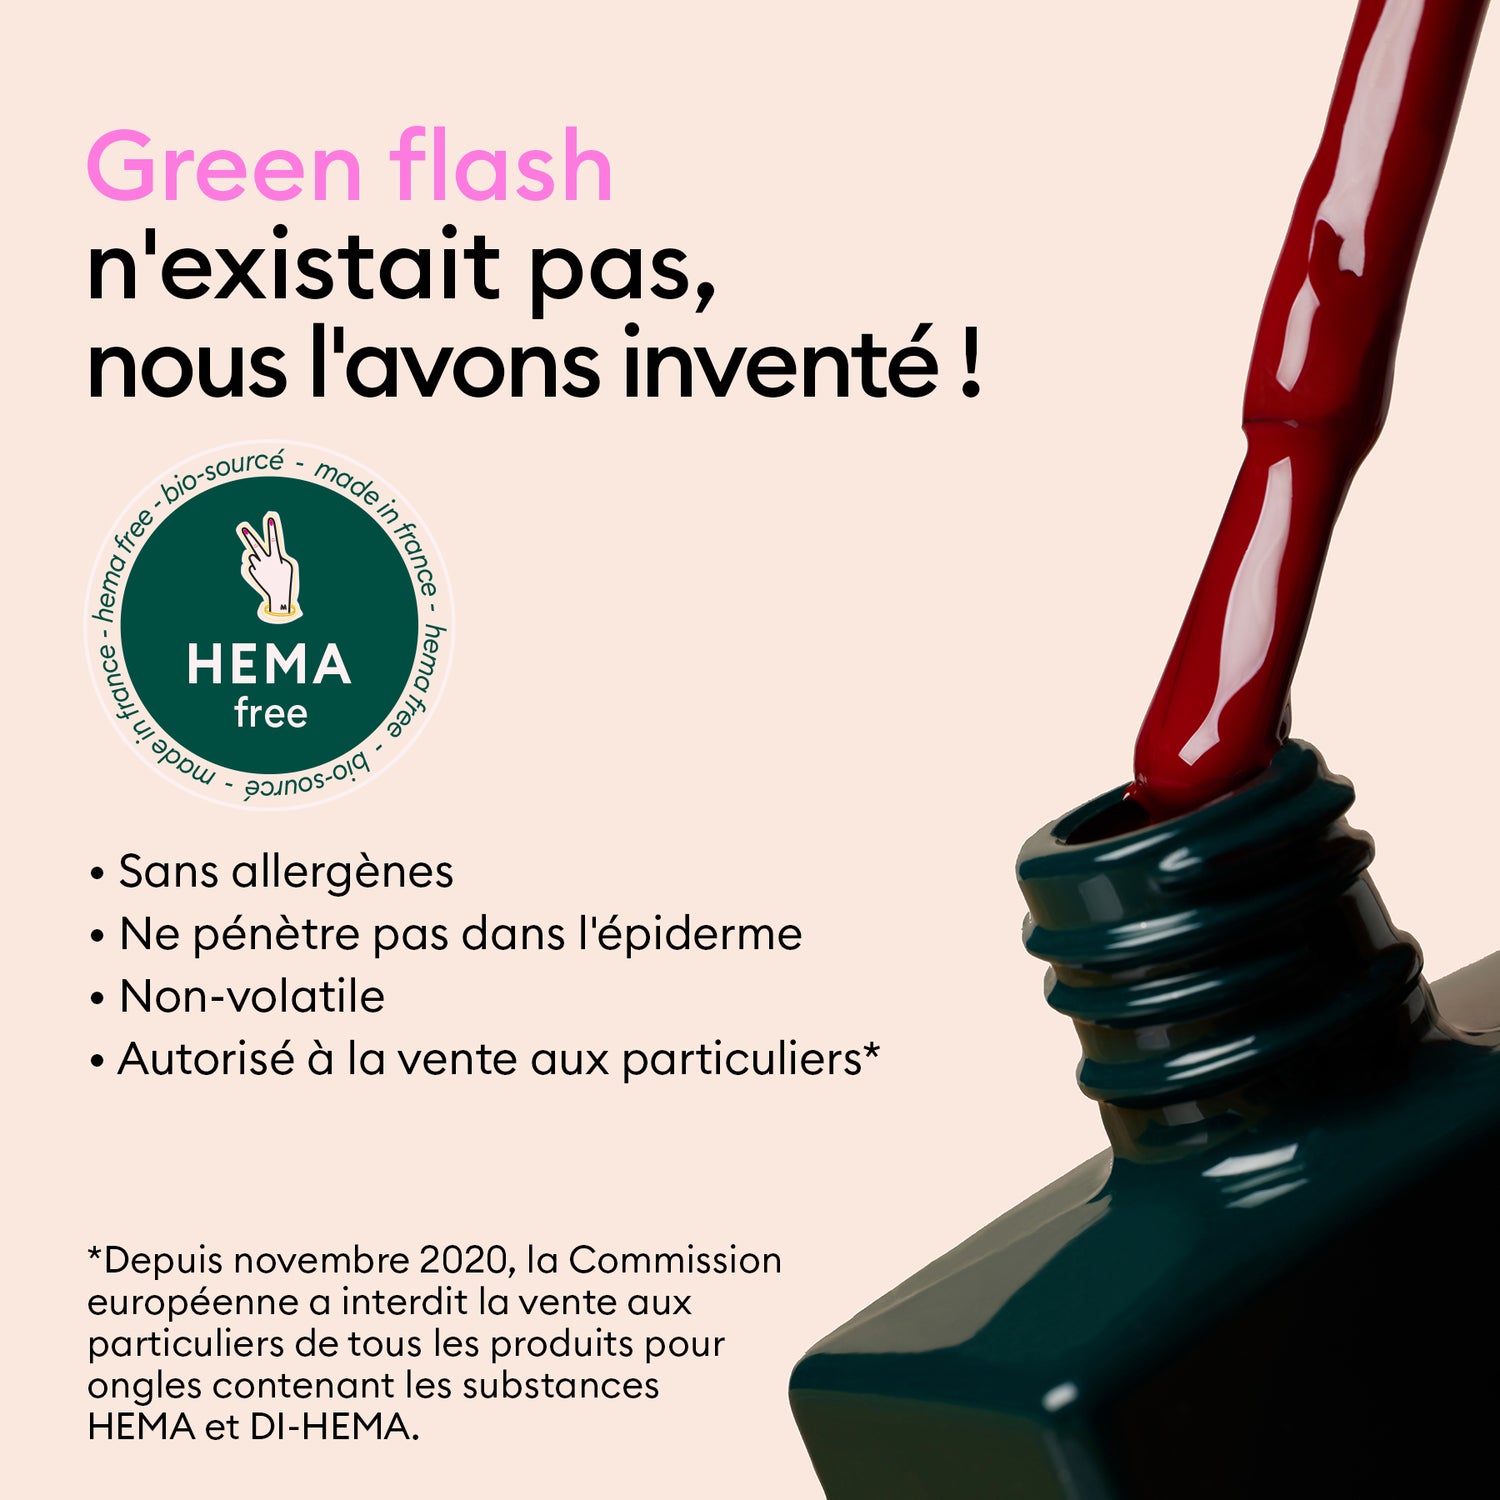 Kit esencial Green Flash